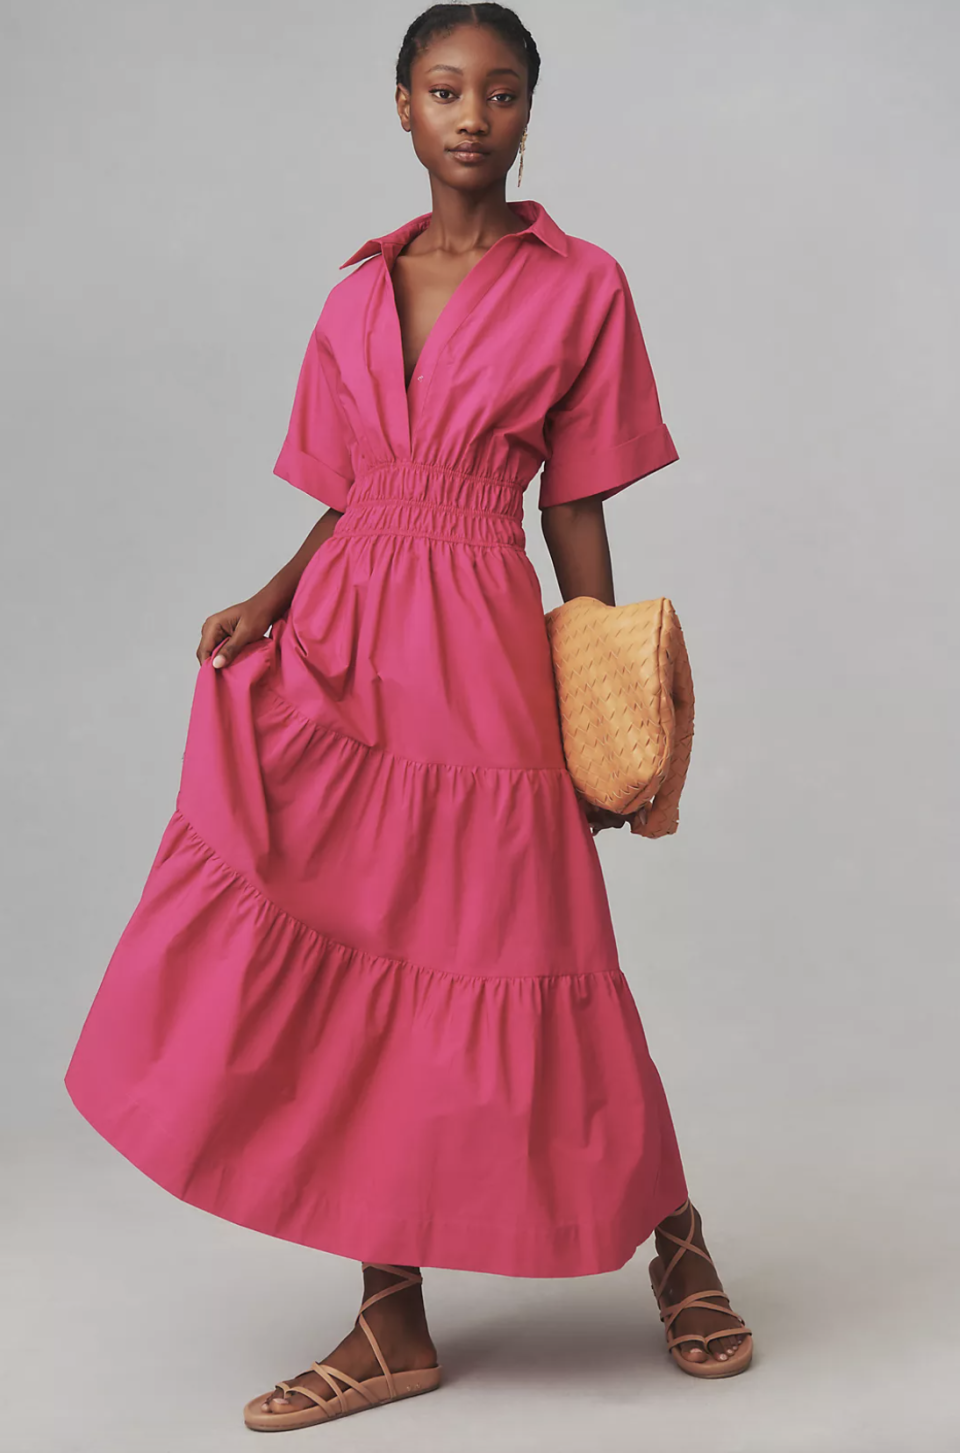 The Somerset Maxi Dress: Shirt Dress Edition (Photo via Anthropologie)